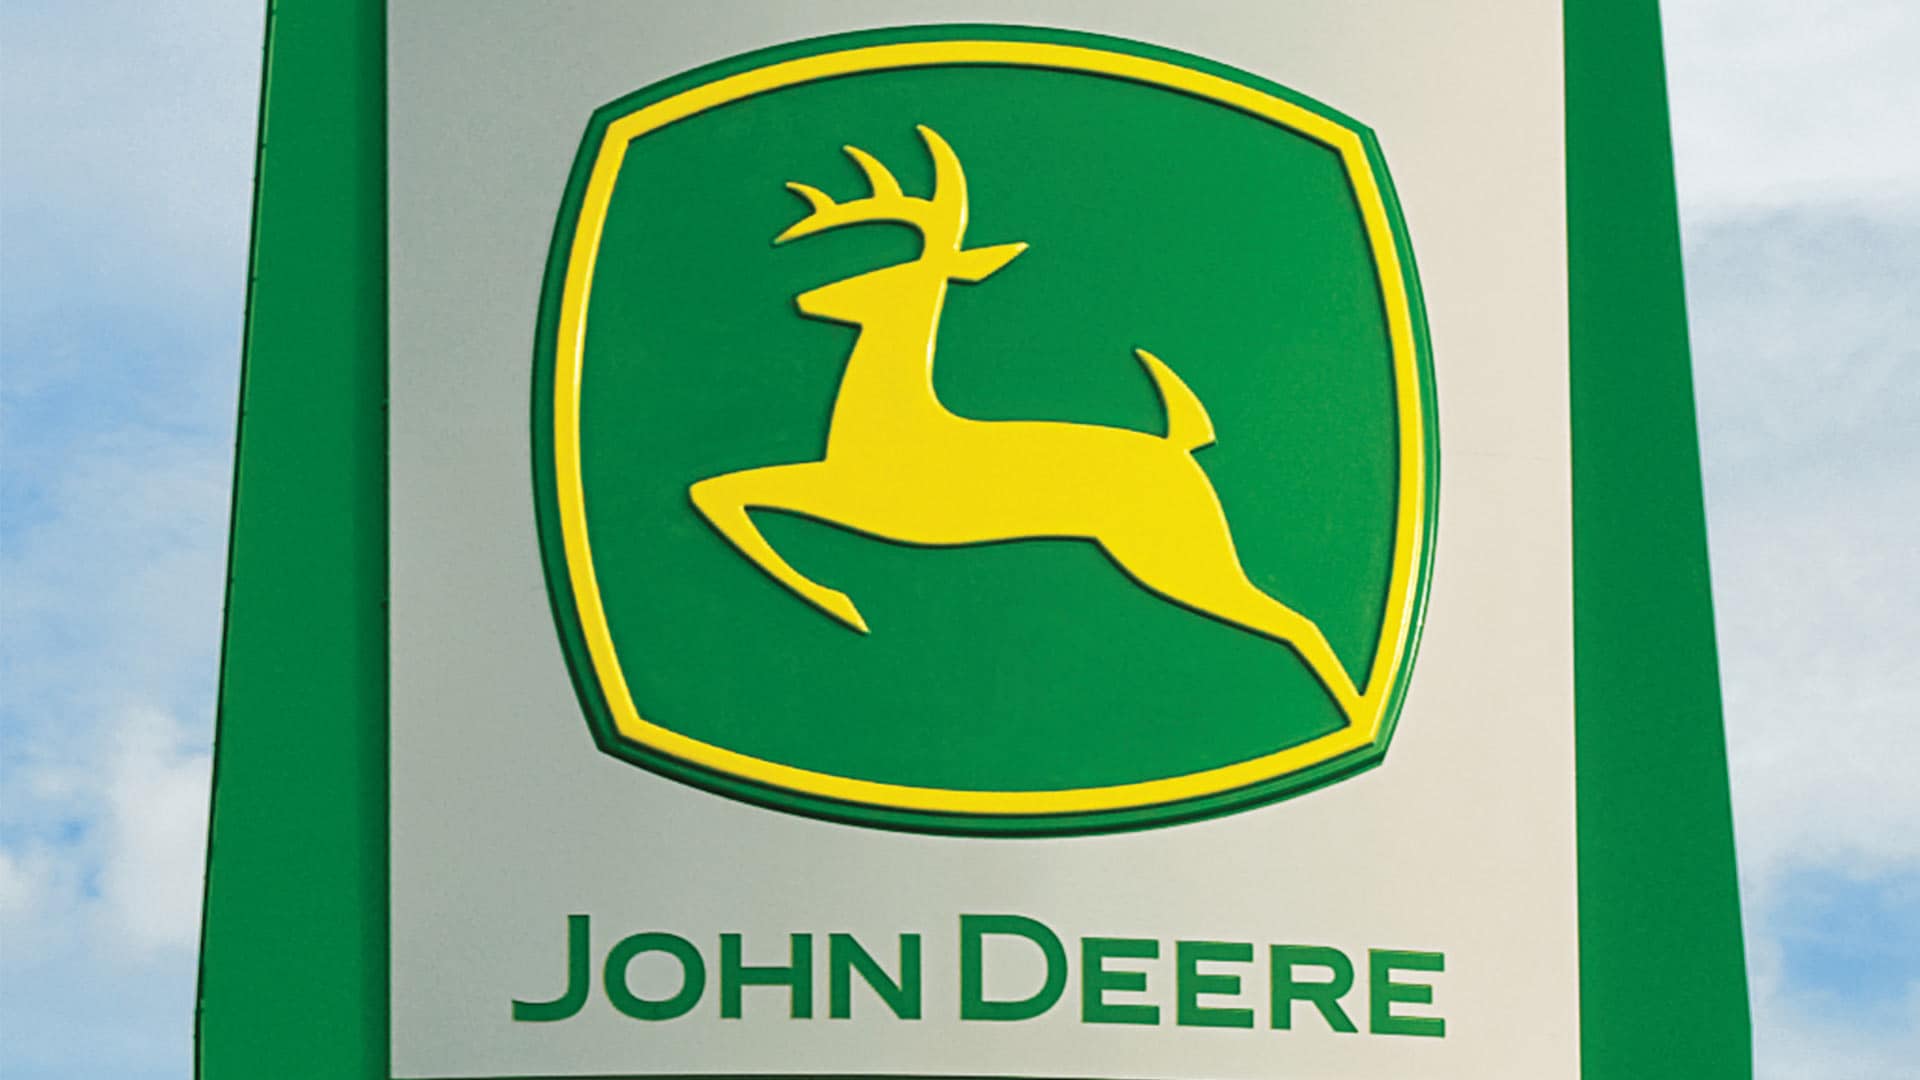 Dealership sign showing John Deere logo